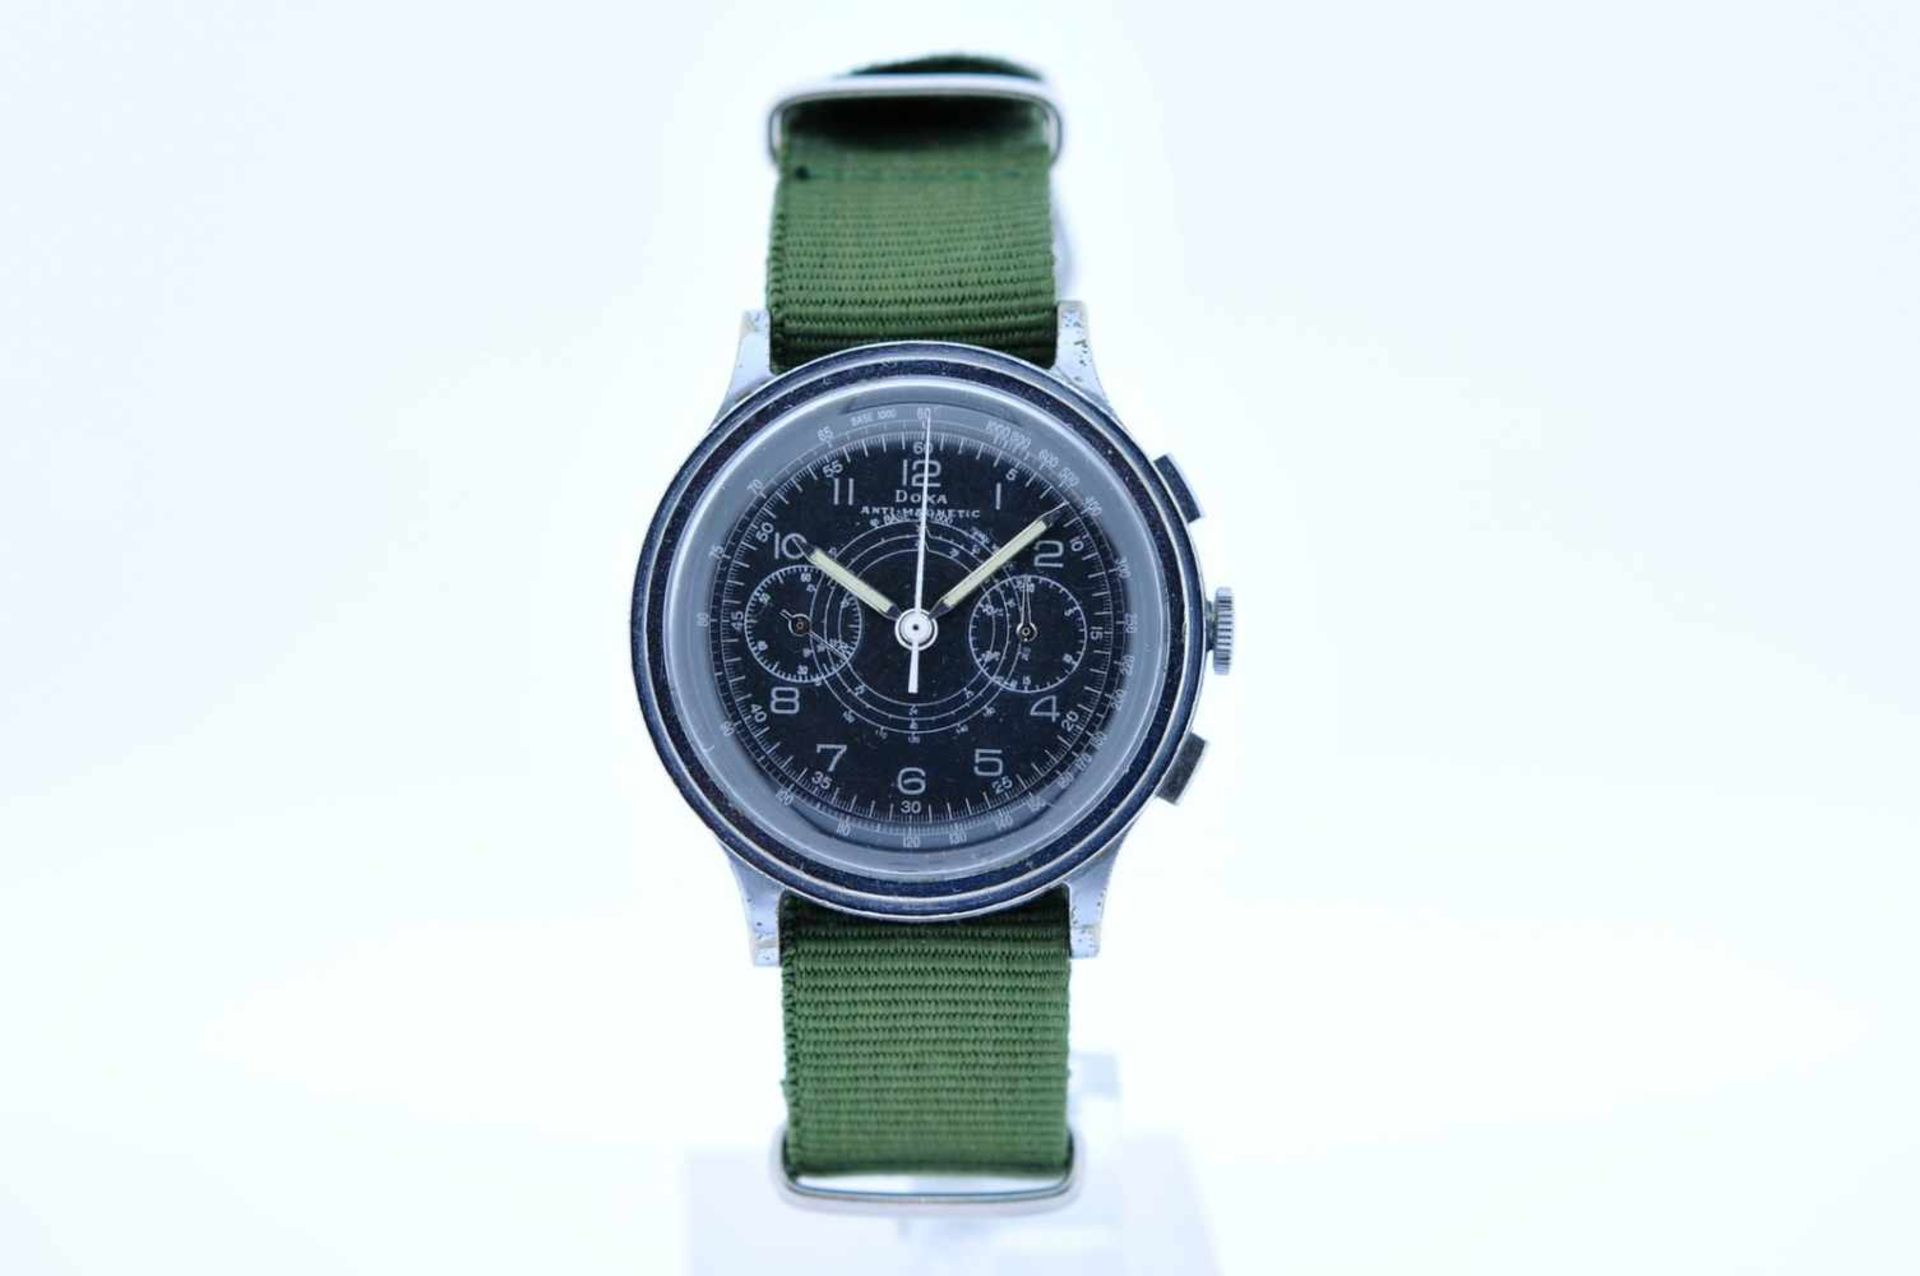 Doxa Edelstahl Armbanduhr an Textilband, Doxa Anti-Magnetic, Fliegerchronograph, Stoppfunktion, - Image 2 of 3